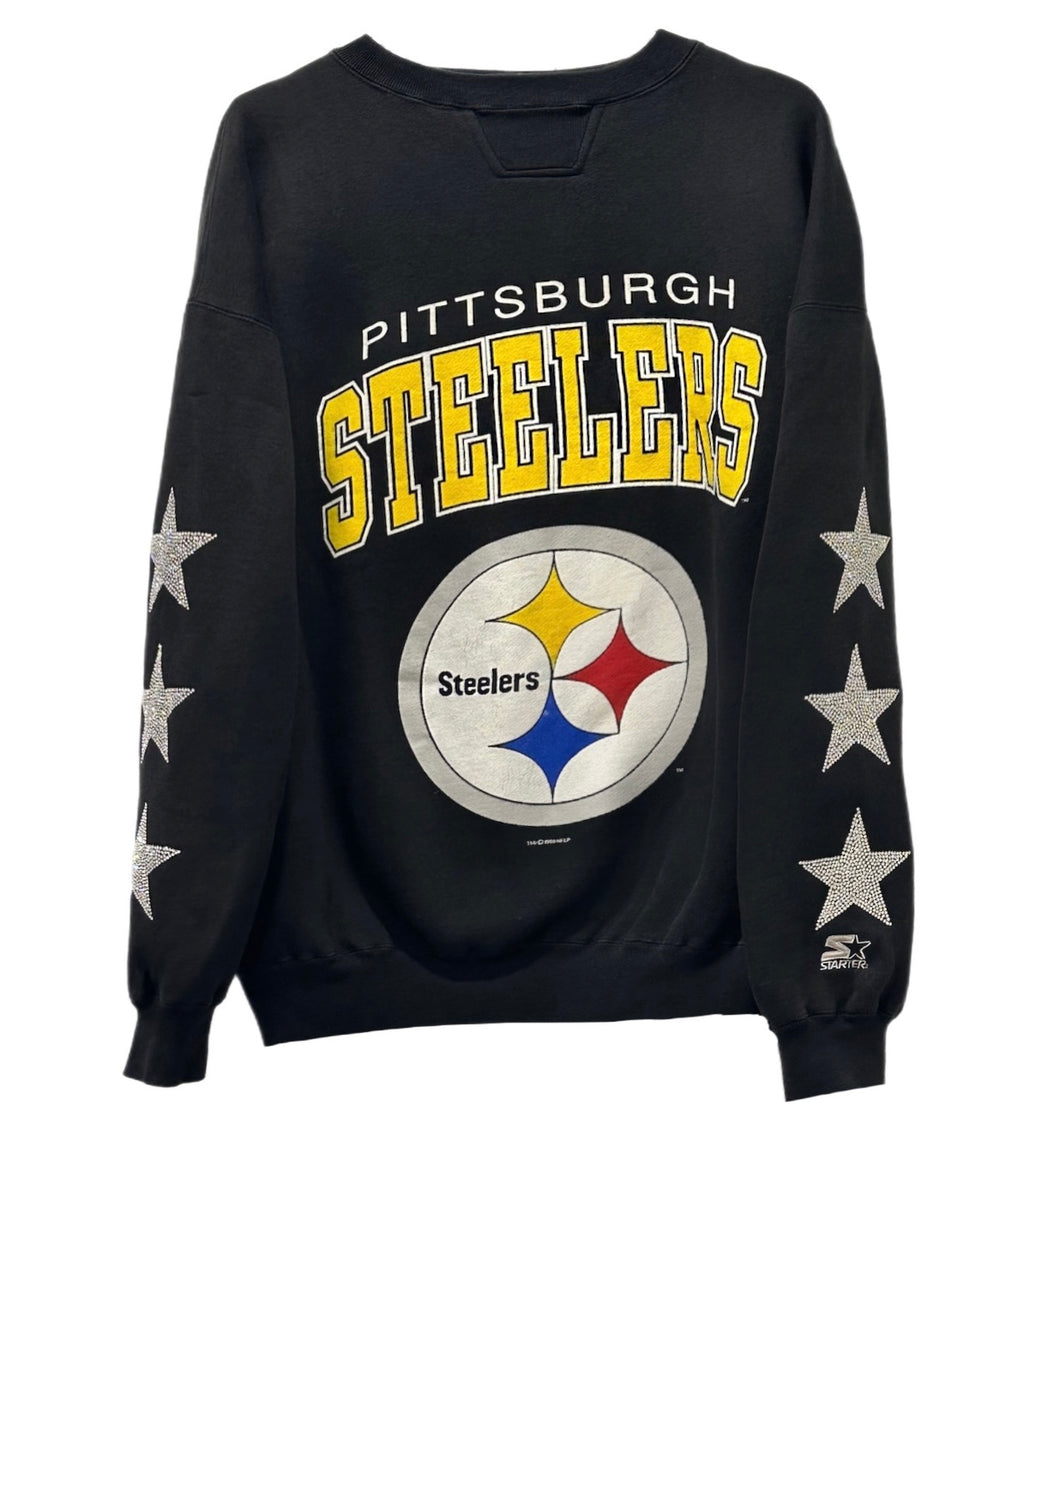 Pittsburgh Steelers, NFL One of a KIND Vintage Sweatshirt with Three  Crystal Star Design